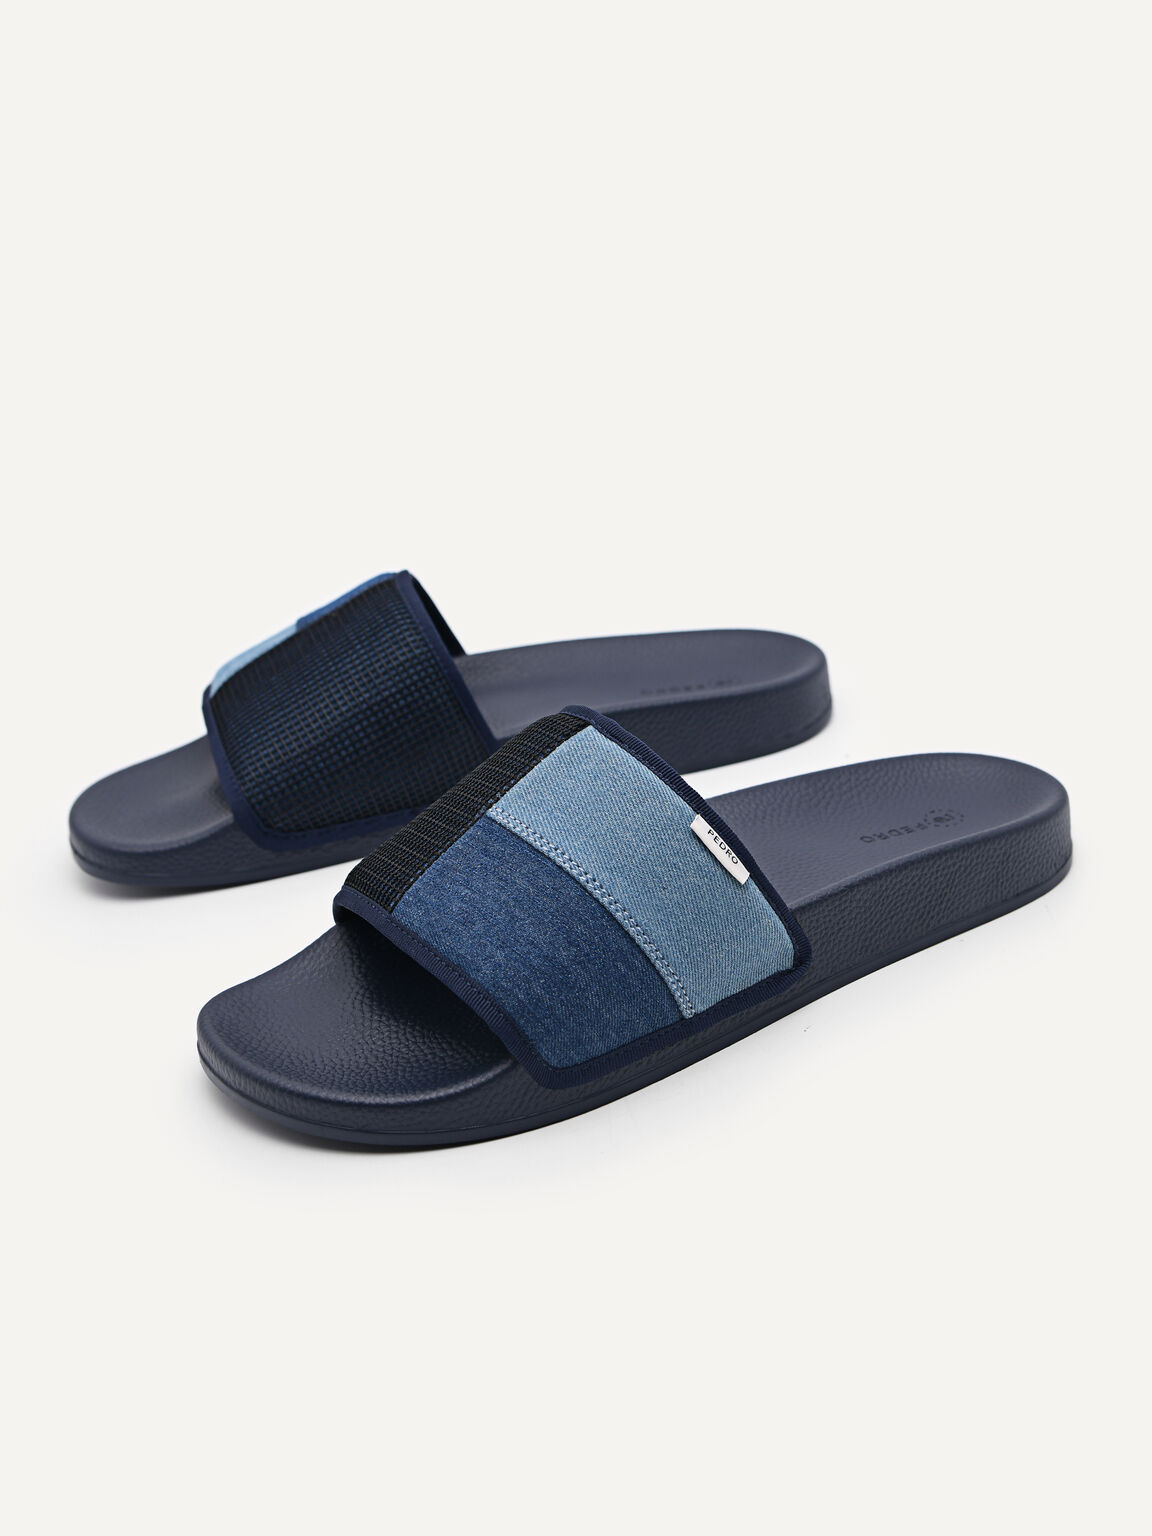 Denim Slide Sandals, Navy